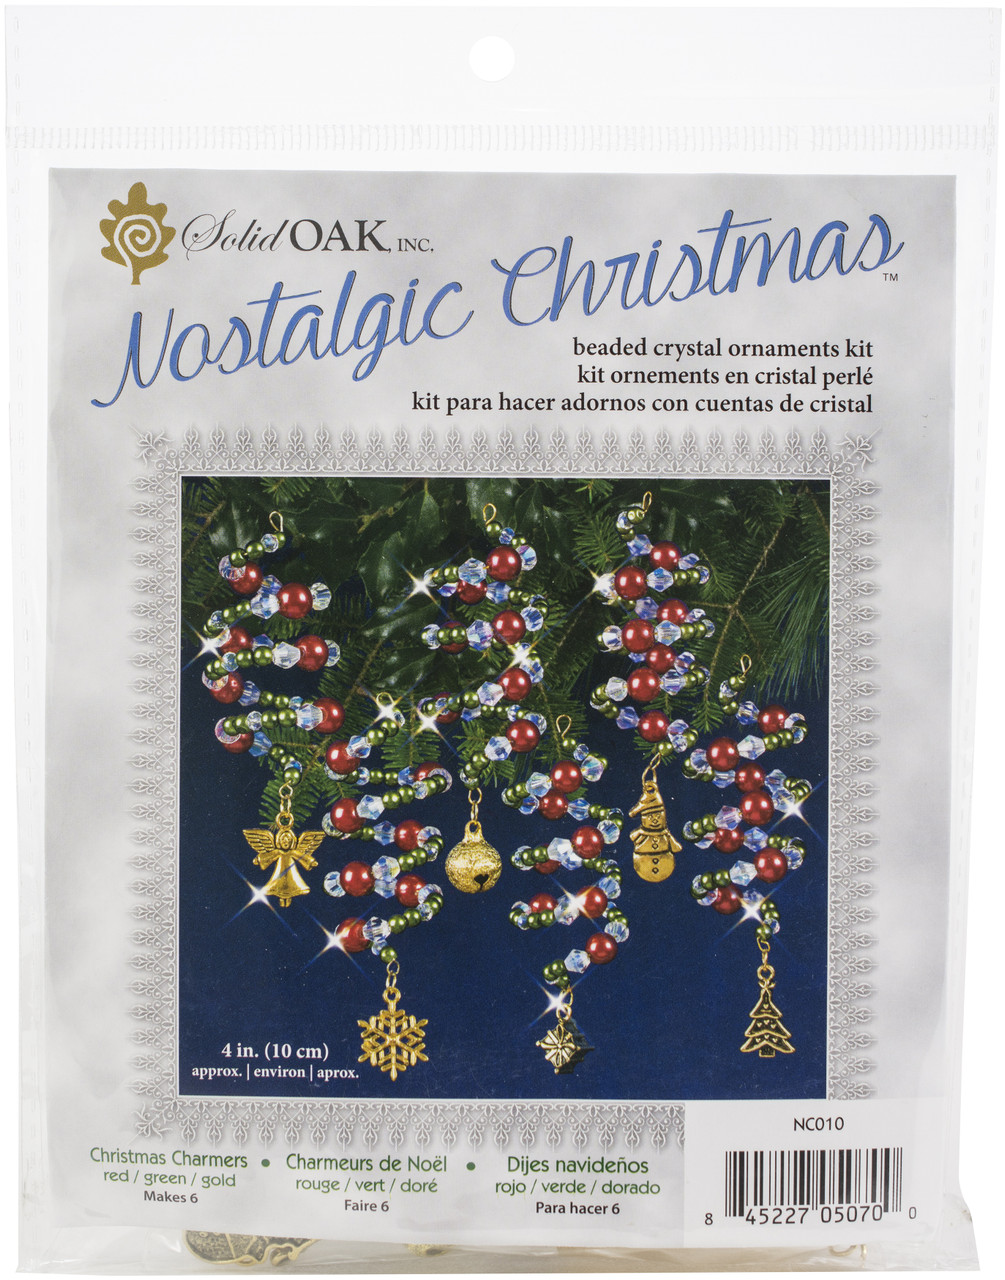 Solid Oak Nostalgic Christmas Beaded Crystal Ornament Kit-Ruby, Green & Gold Christmas Charmers